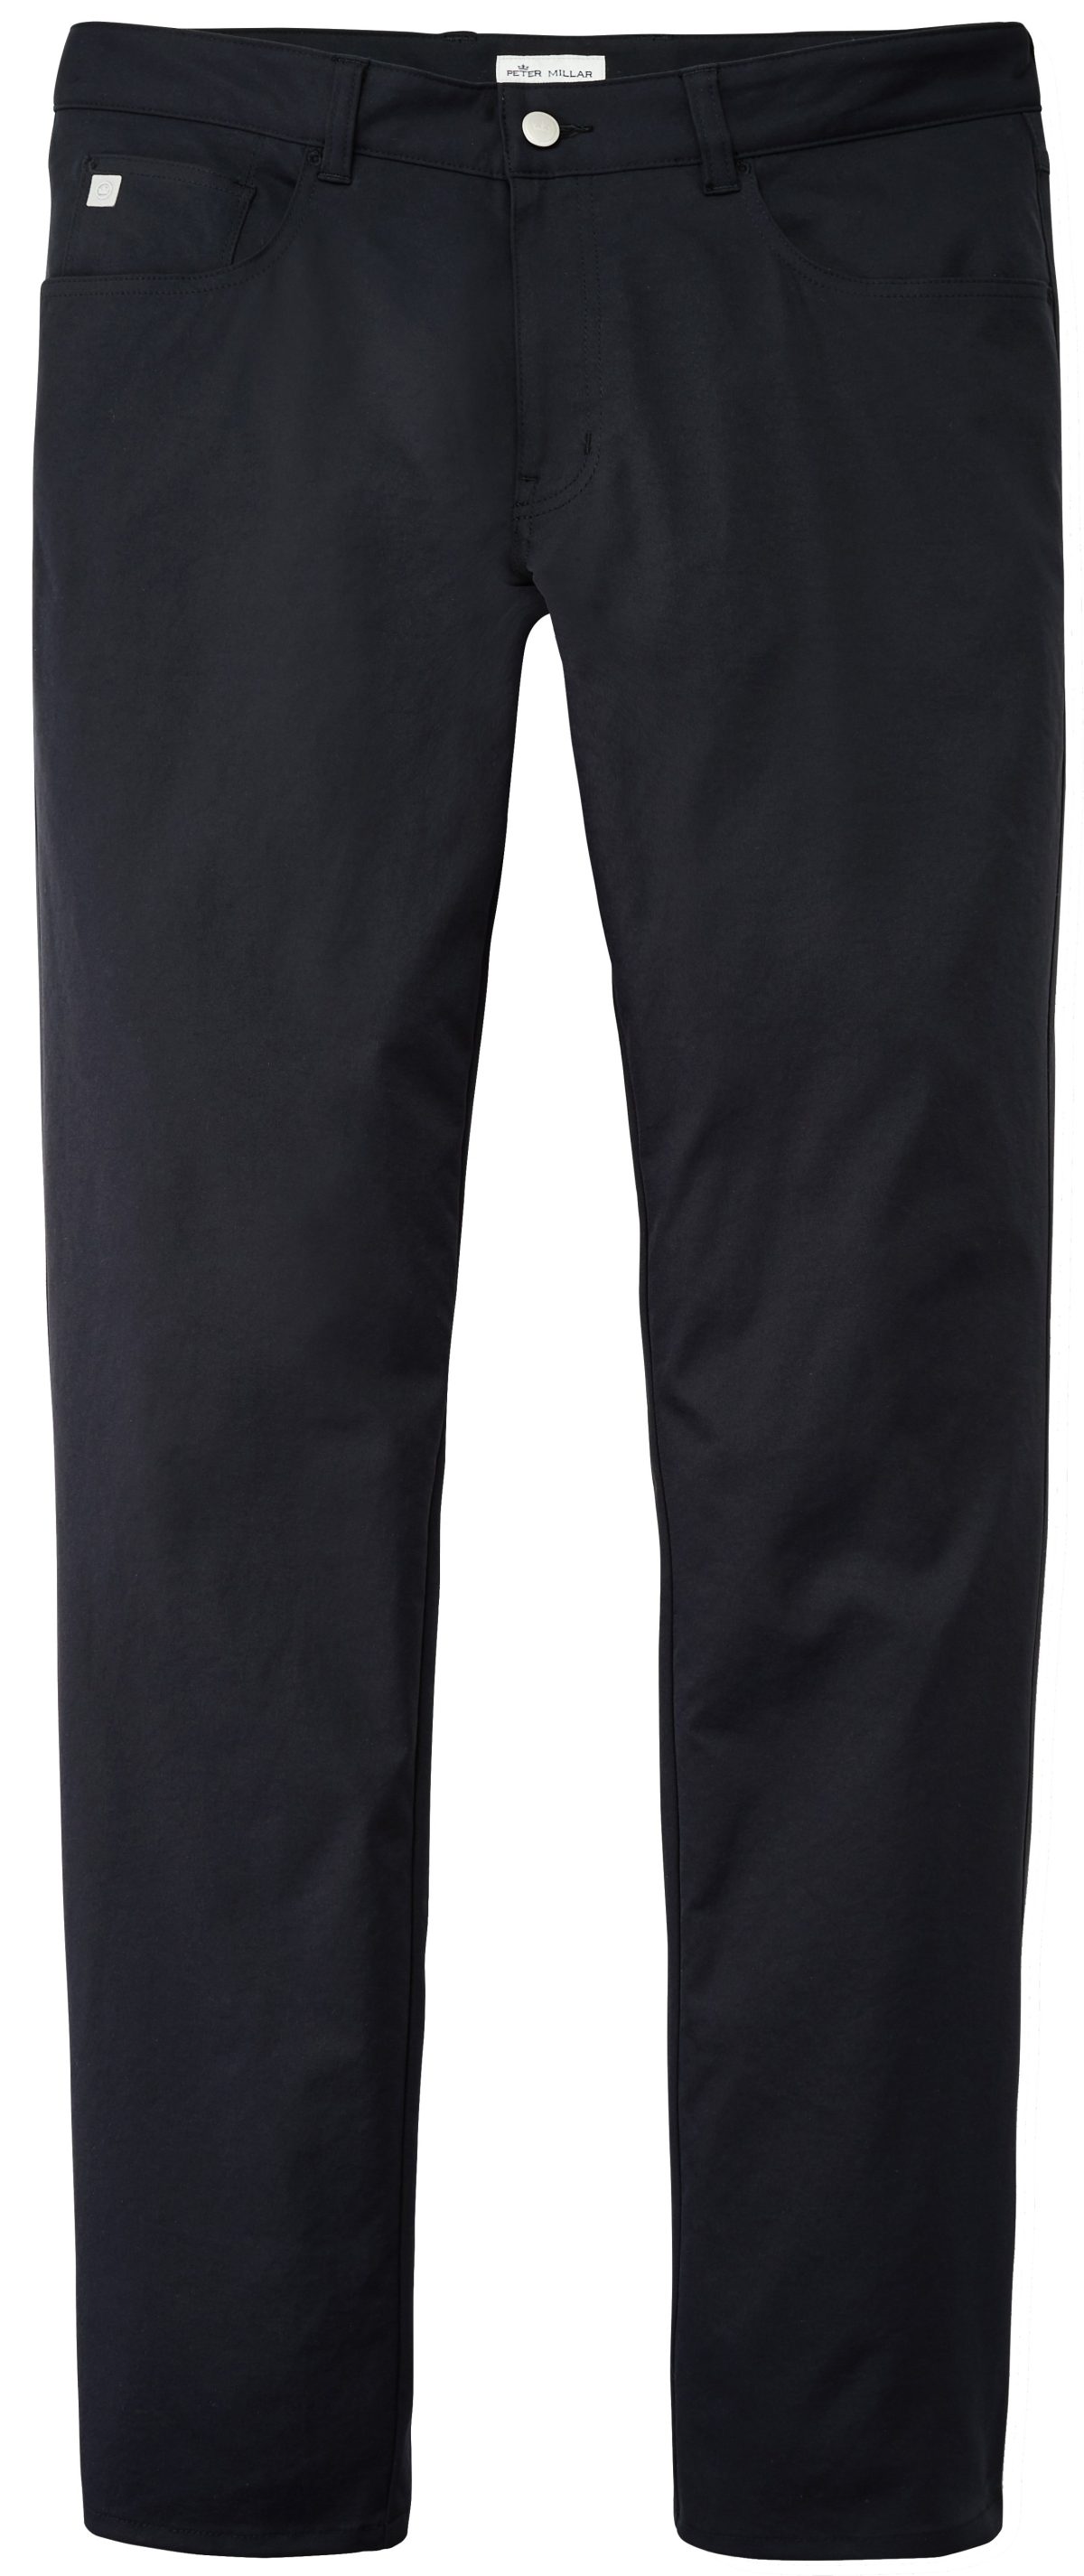 Peter Millar Men's Eb66 Perf 5 Pocket Pant, 100% Polyester in Black, Size 30x30